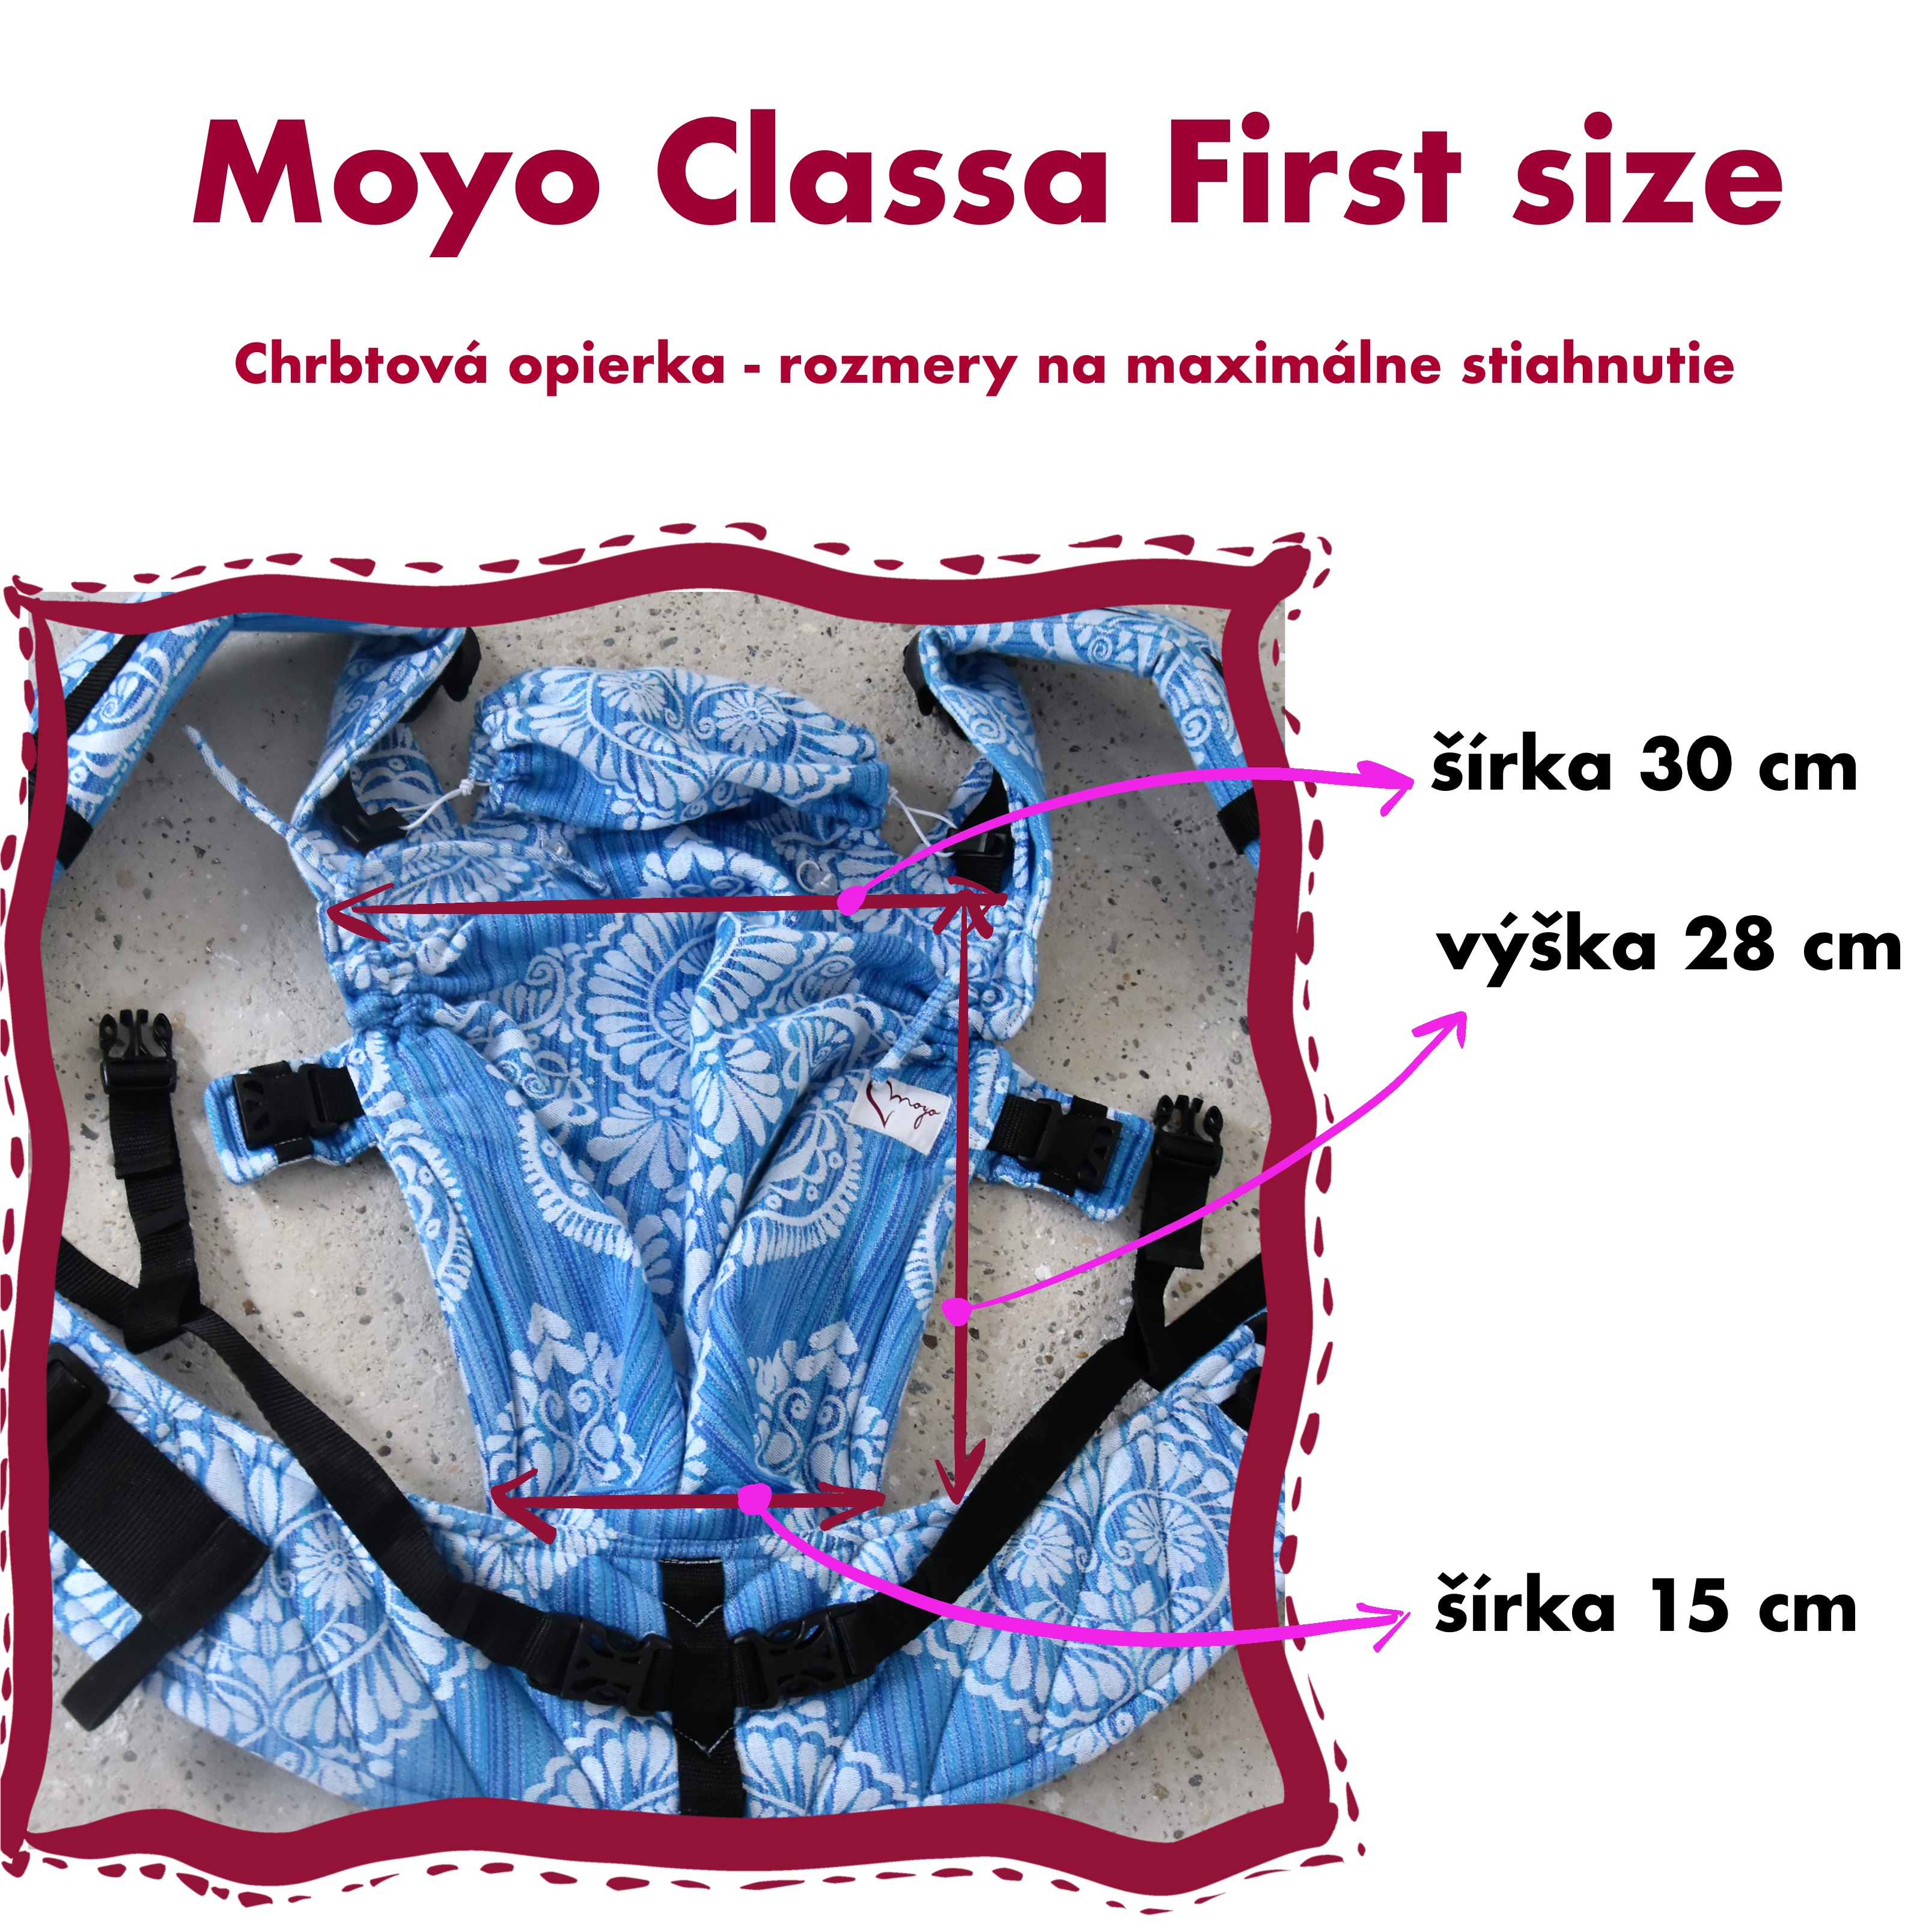 Rozmery Moyo Classa First size